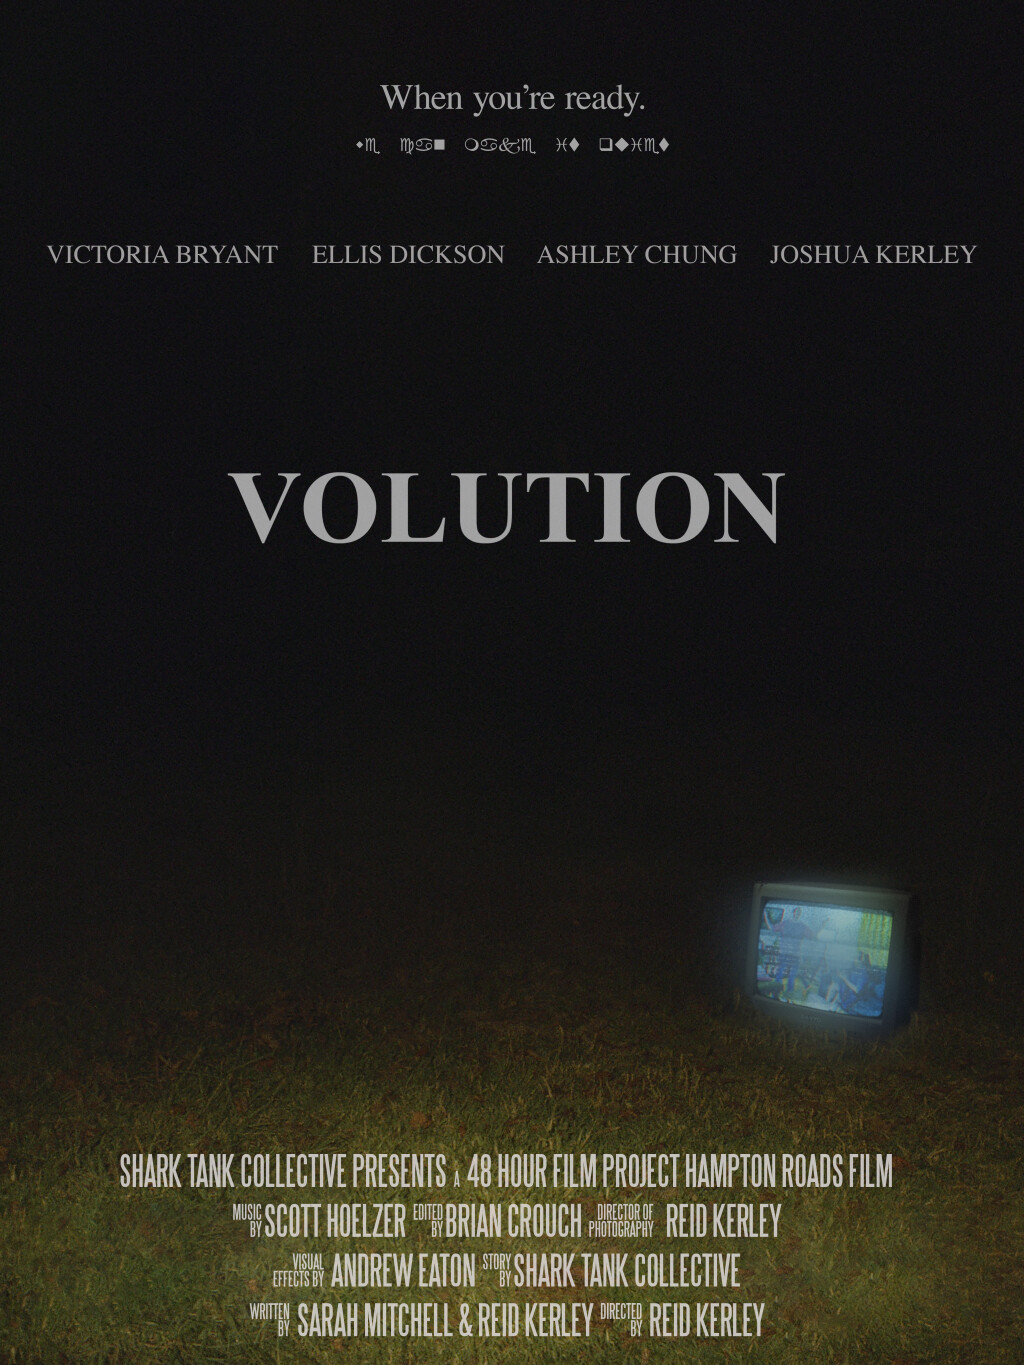 Filmposter for VOLUTION